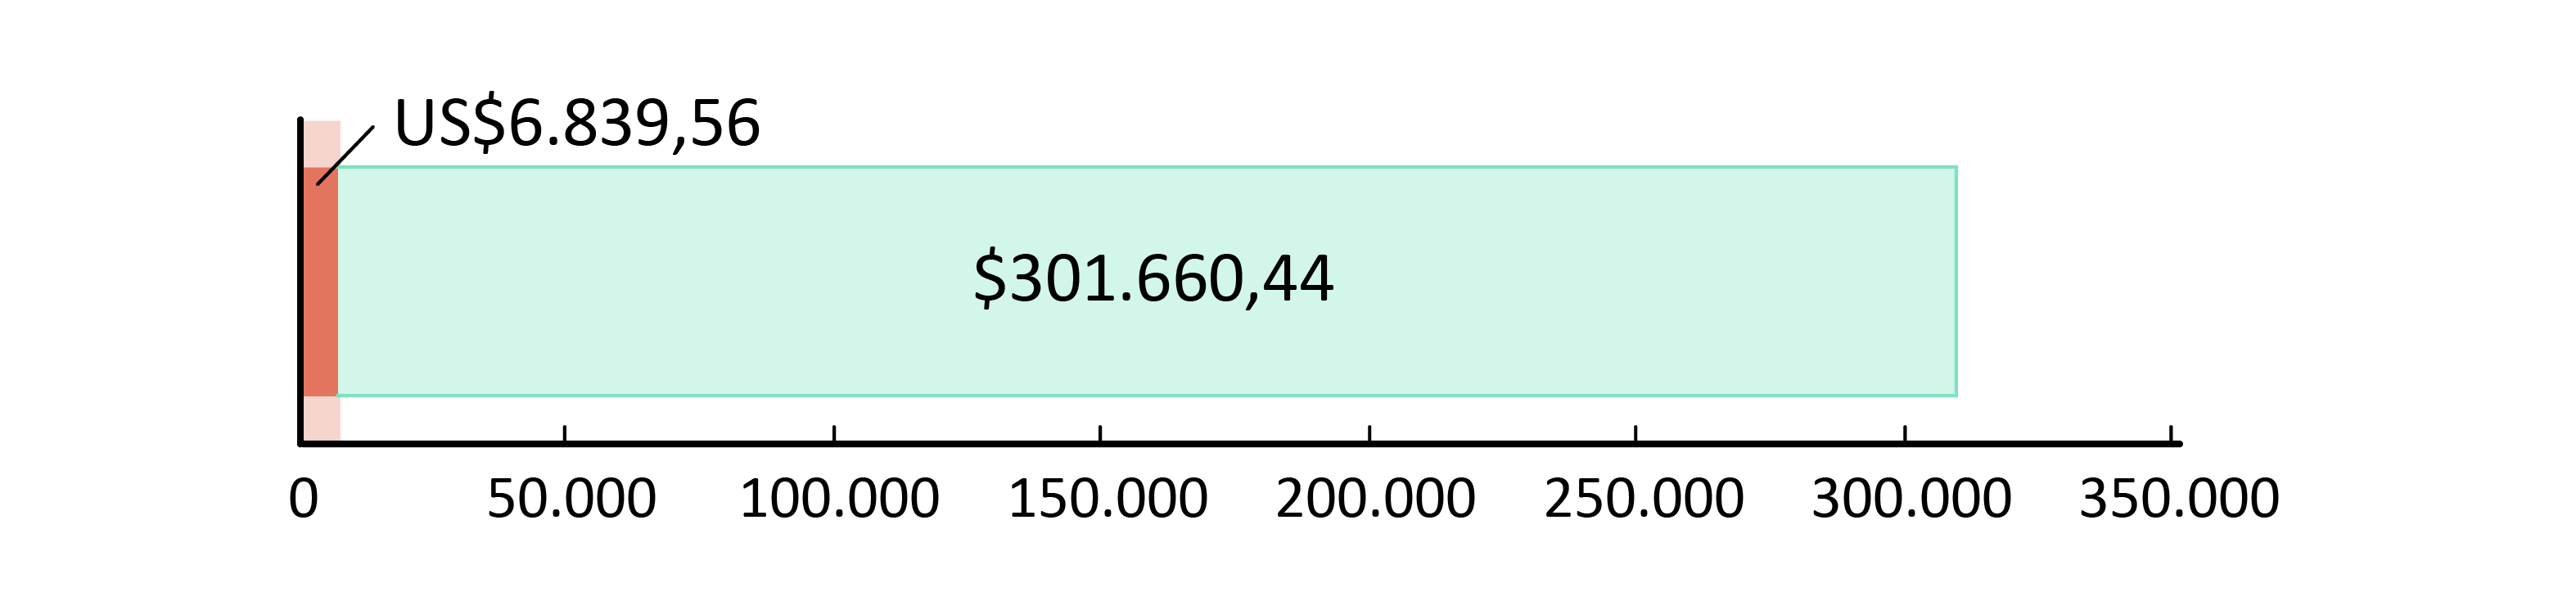 US$6,839.56 doados; US$301,660.44 previstos